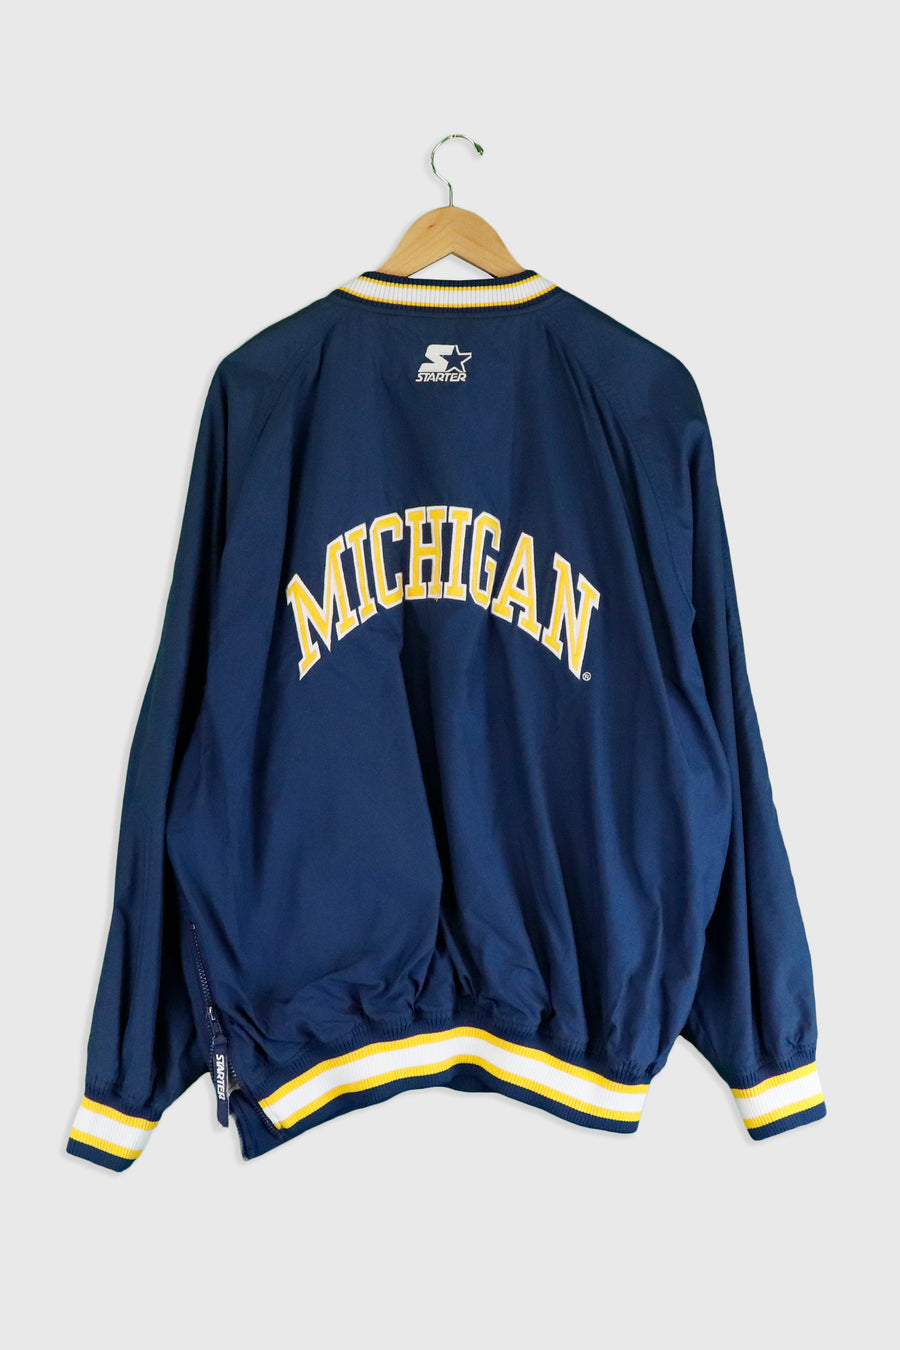 Vintage Starter Michigan State Embroidered Jersey Sz L